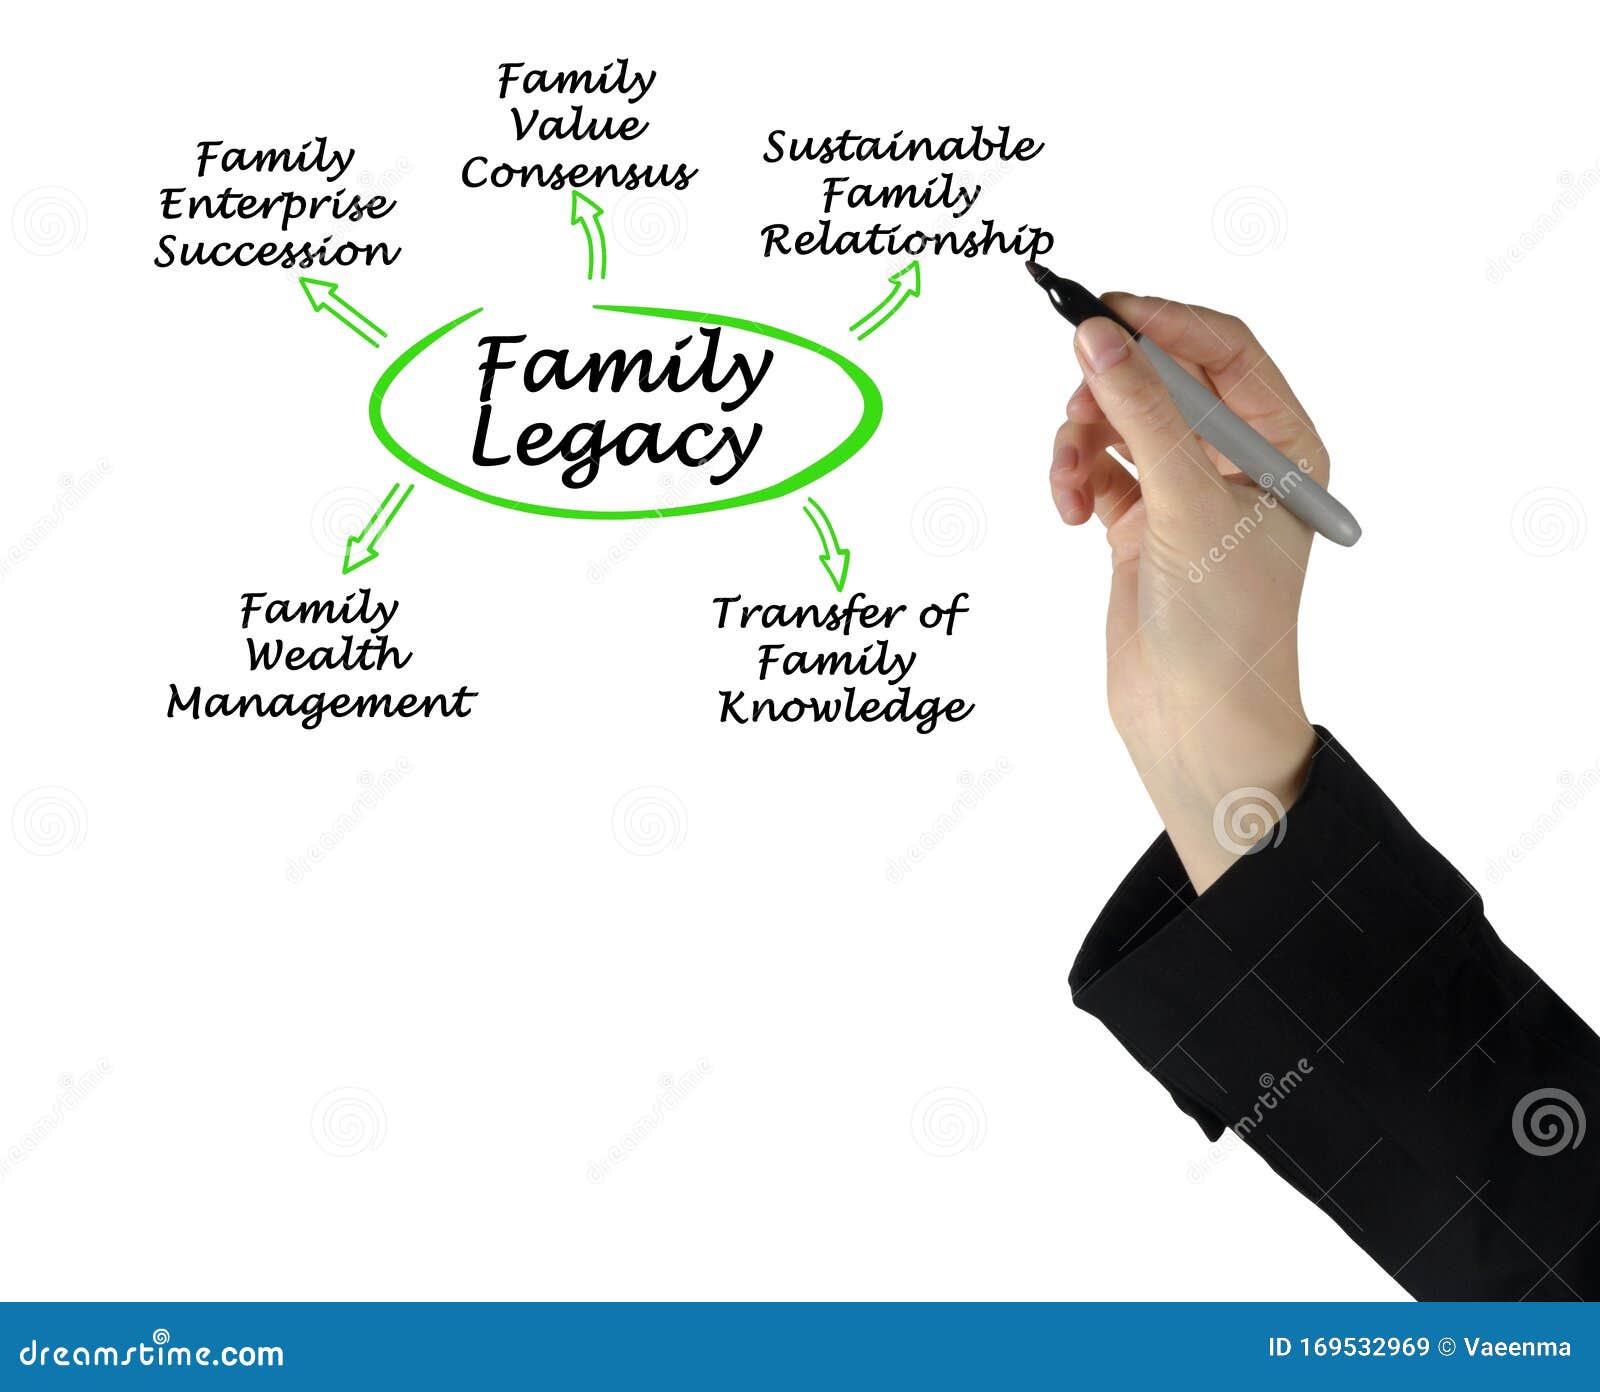 pathways to family legacy